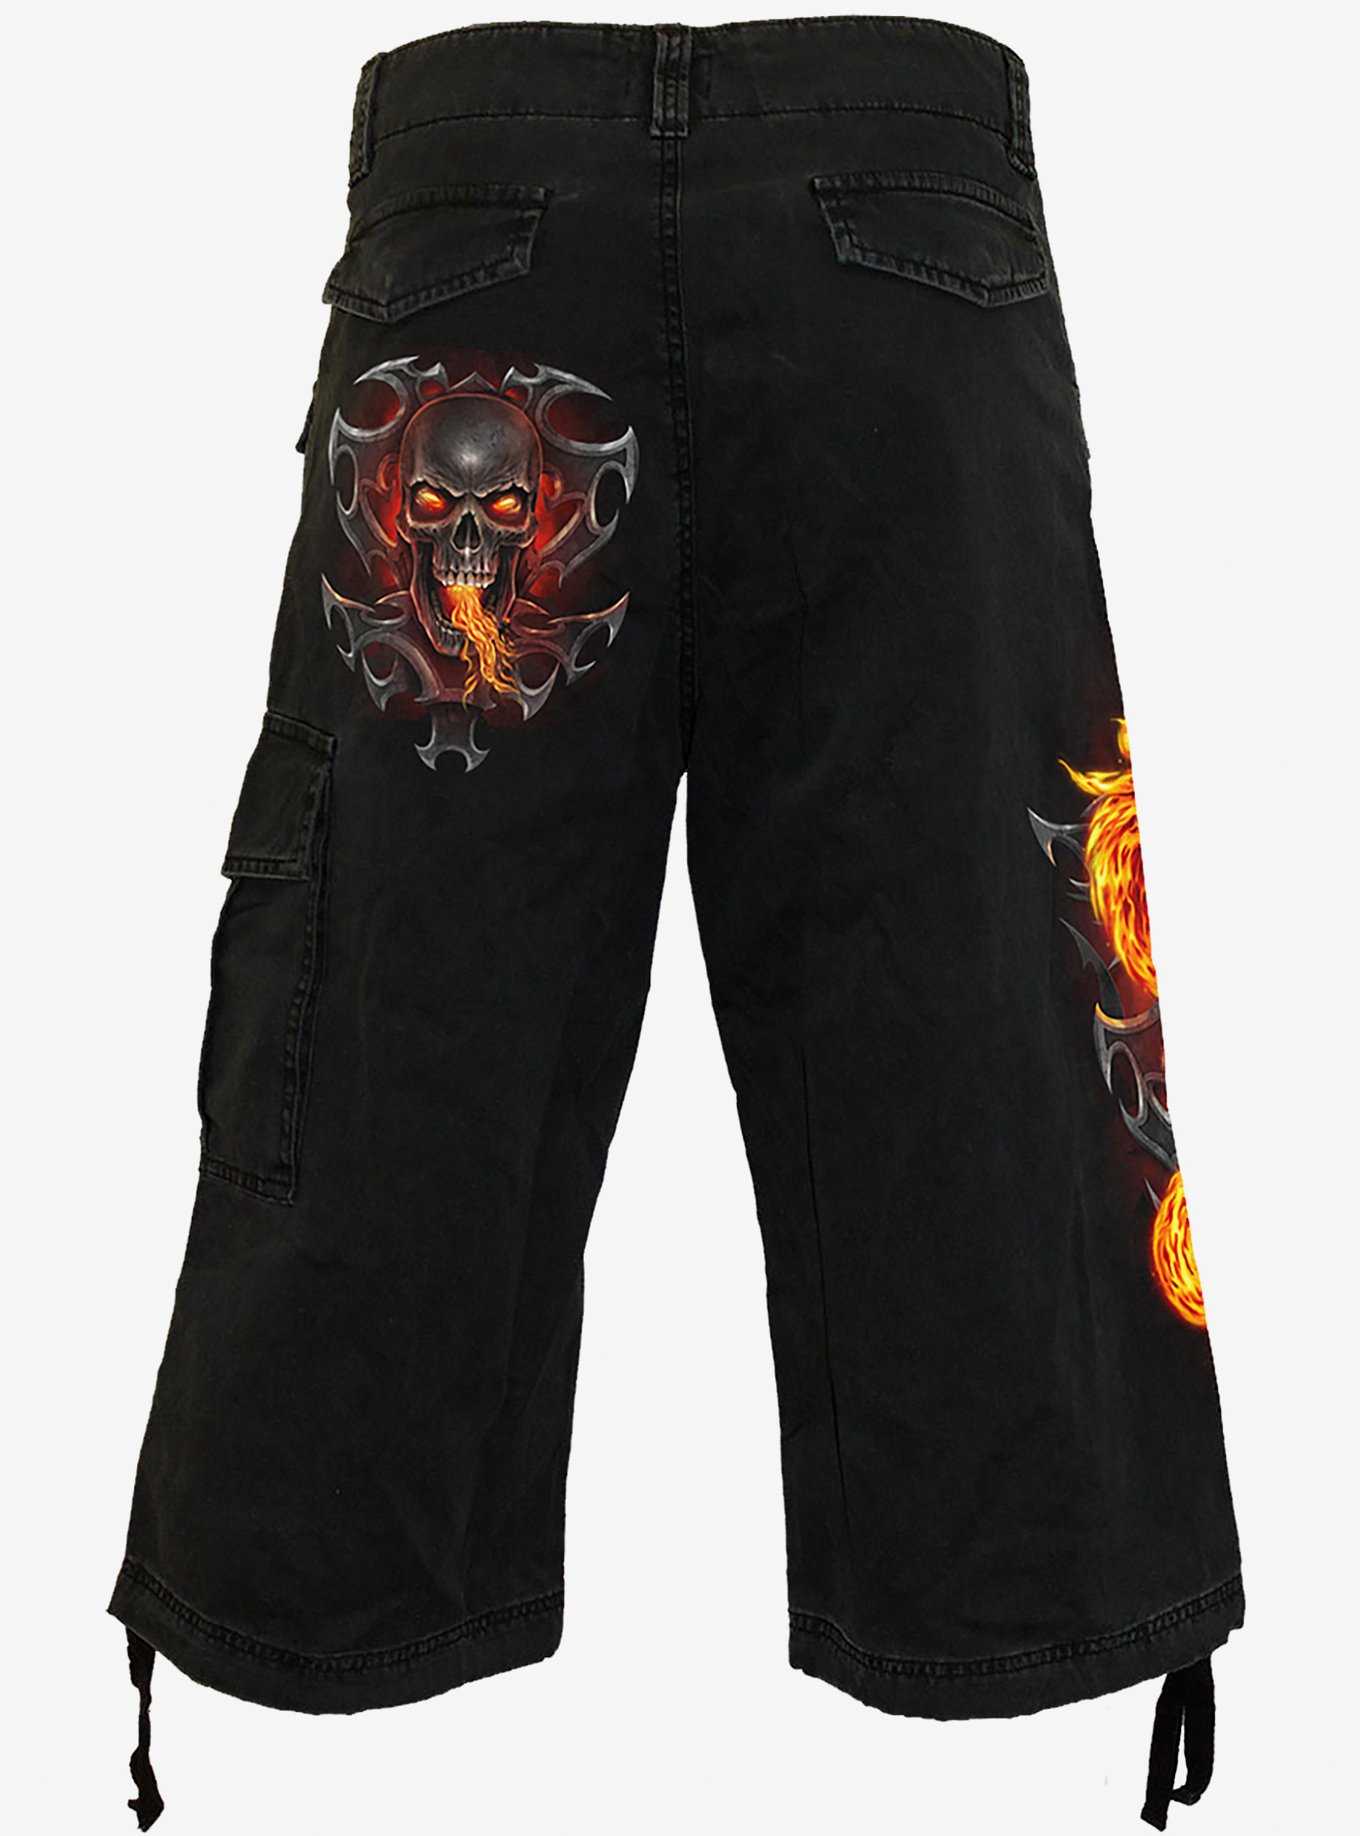 Fire Dragon Vintage Cargo Shorts, , hi-res